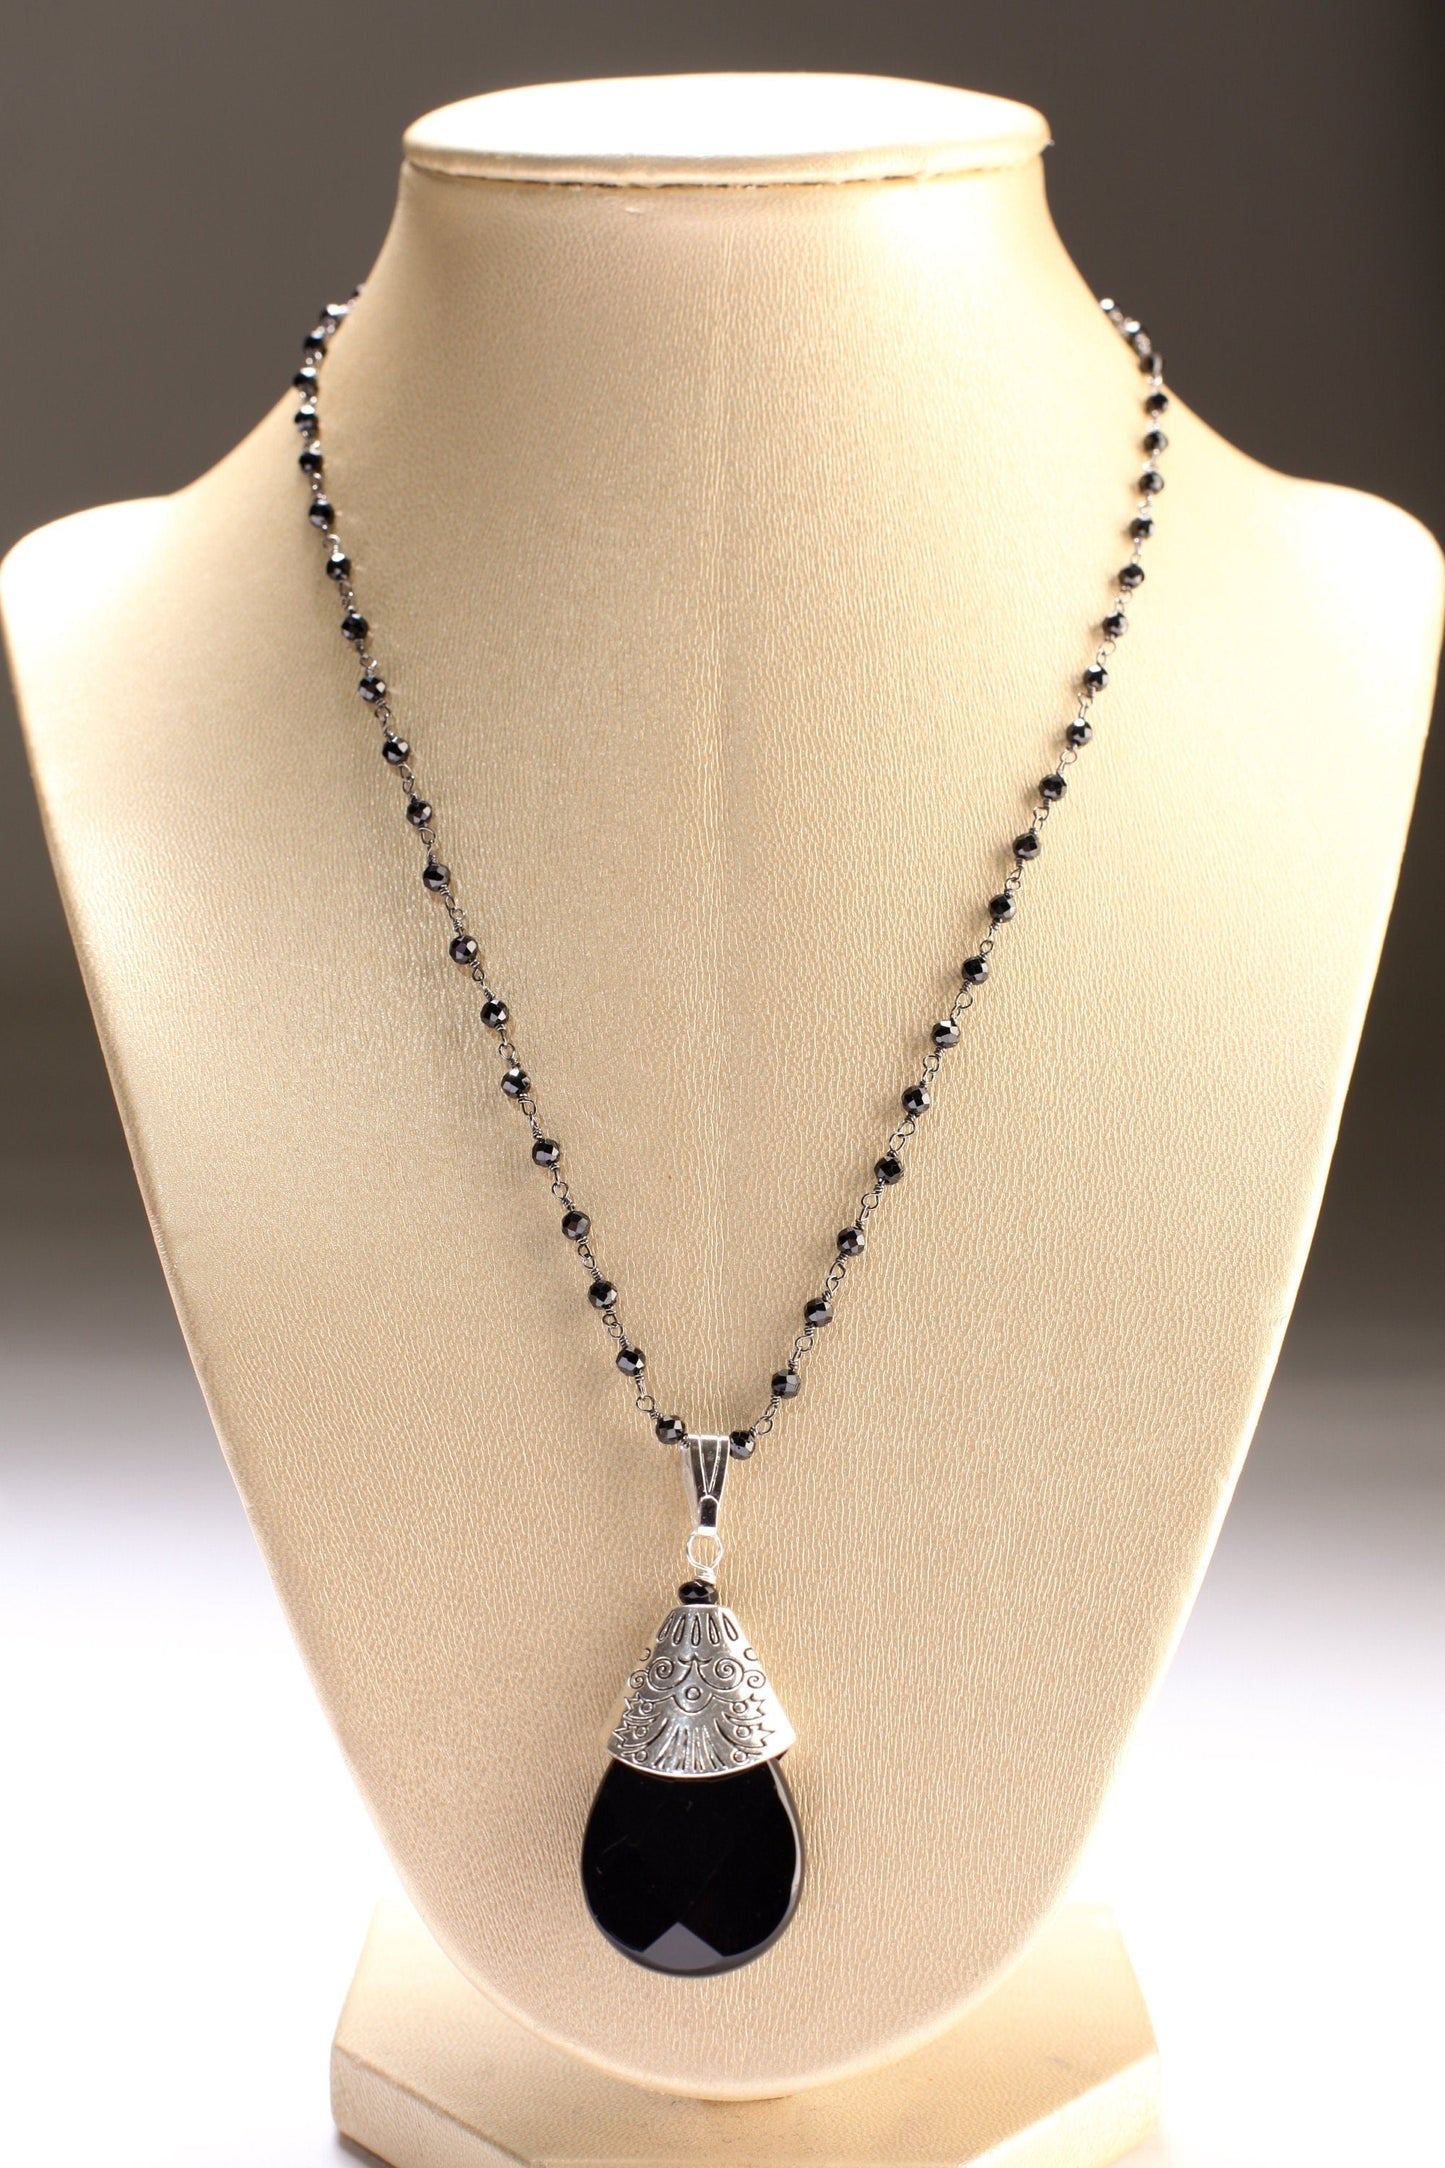 Black Spinel Diamond Cut Necklace with Oxidized Silver Teardrop, Large Bali Style Cap, Black Onyx Pear Drop Pendant Necklace